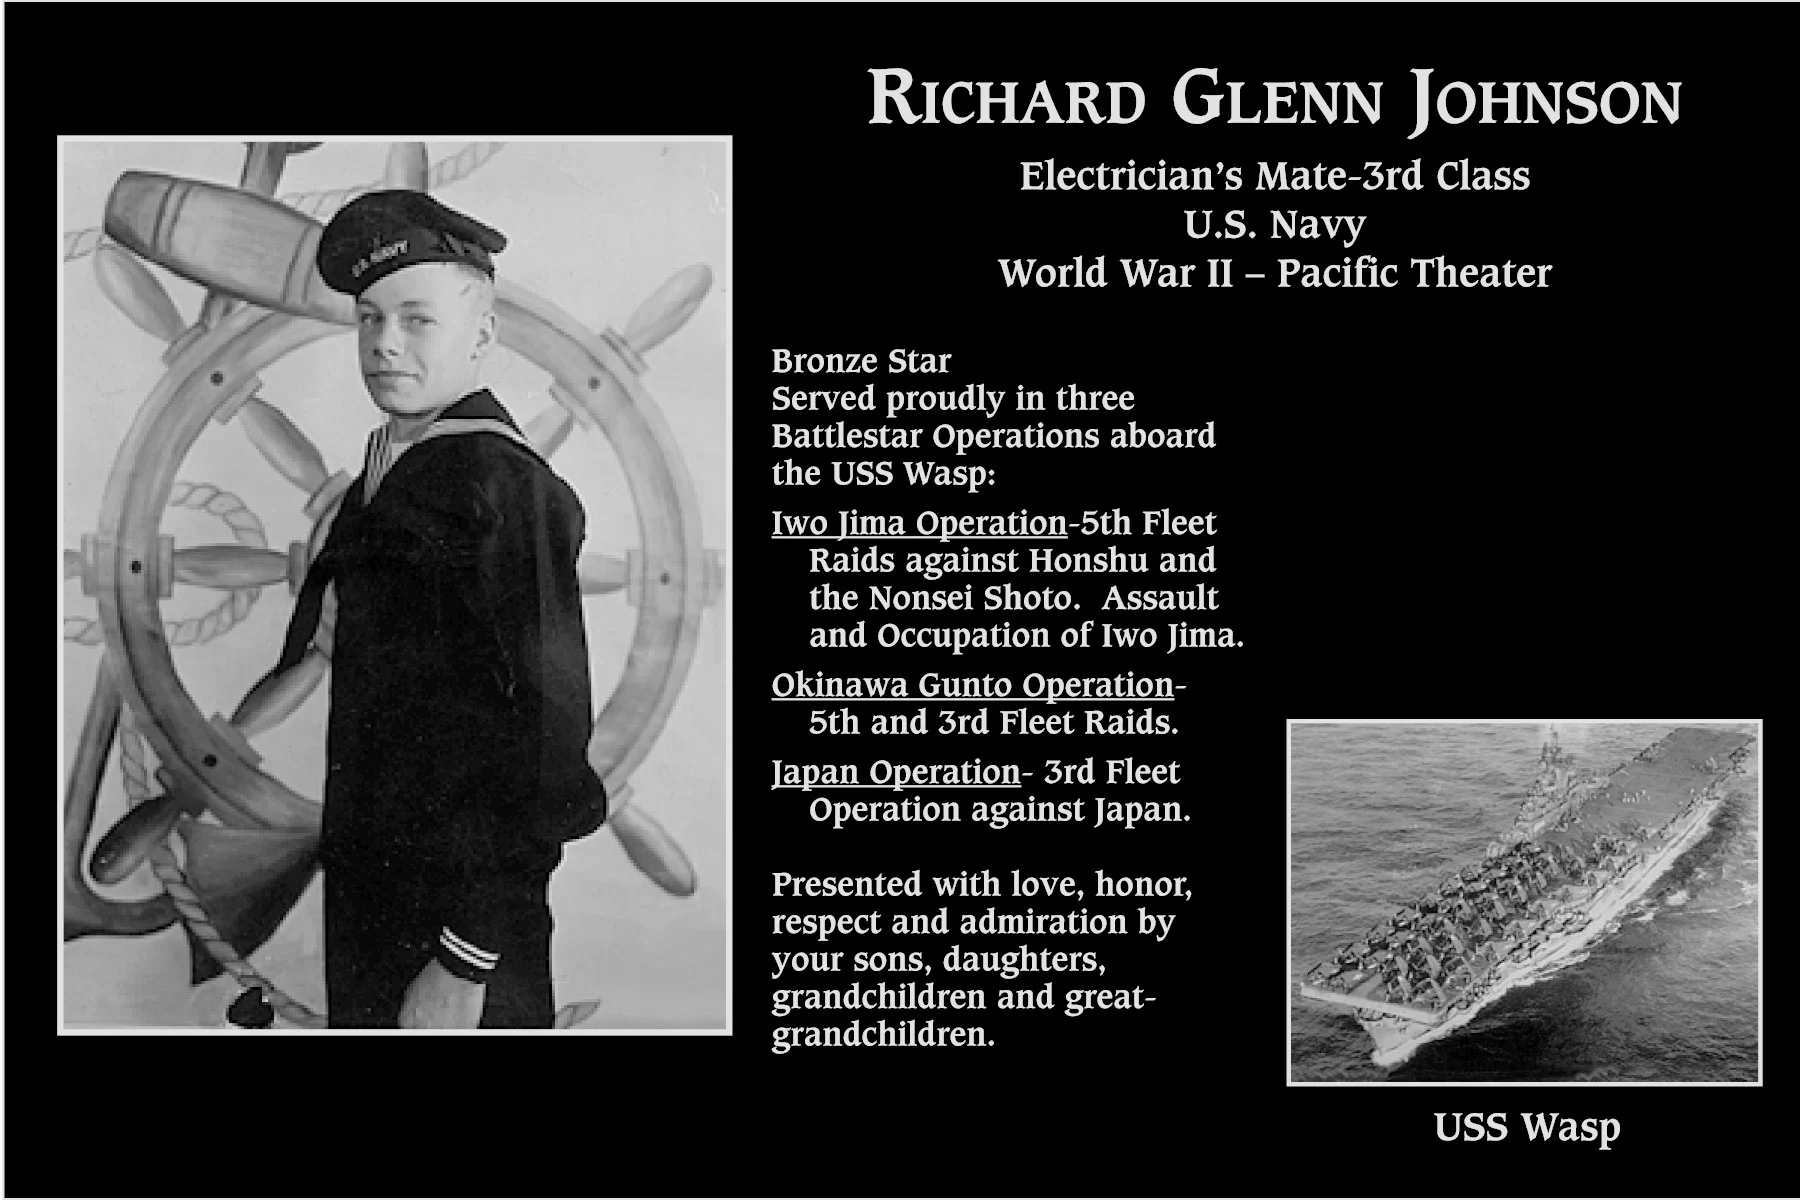 Richard Glenn Johnson